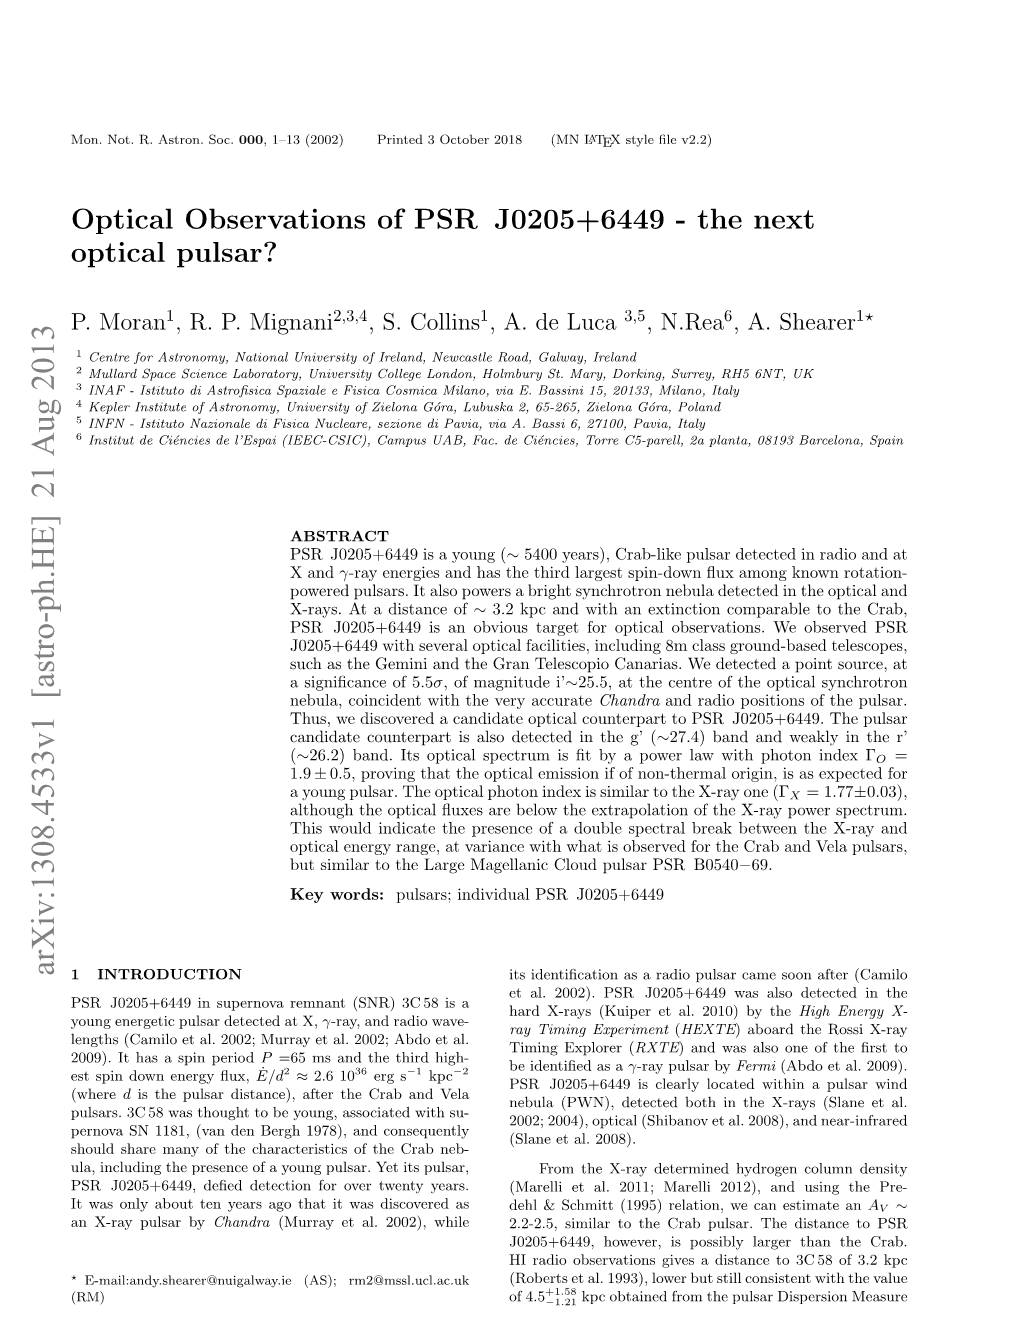 Optical Observations of PSR J0205+ 6449-The Next Optical Pulsar?